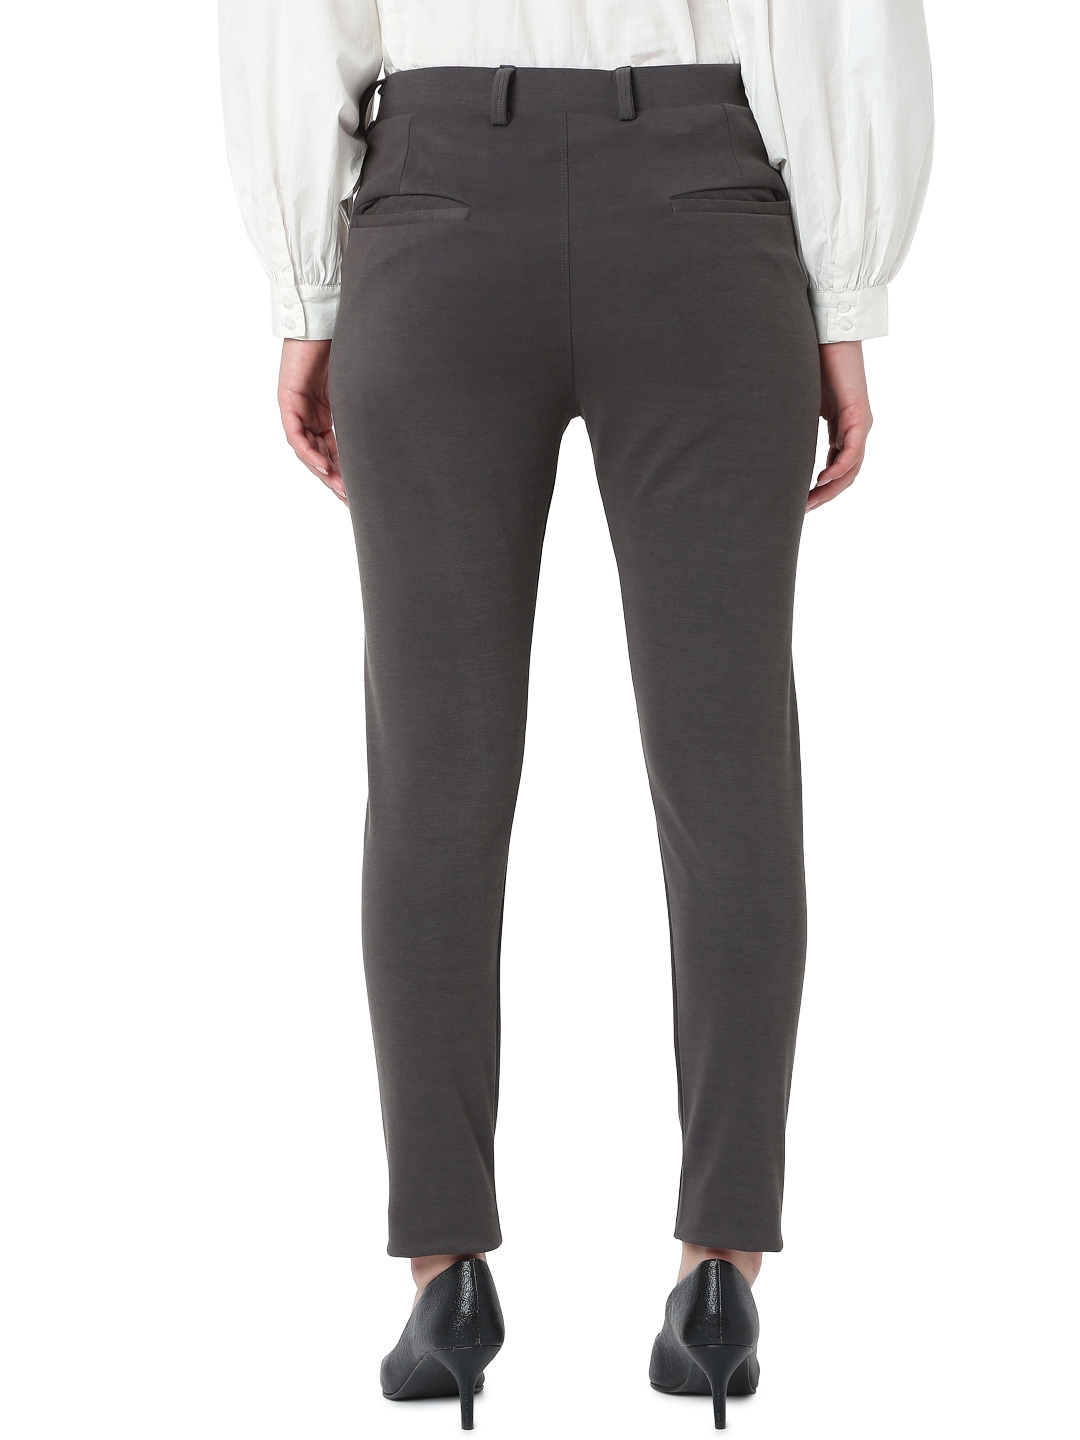 Buy Grey Trousers  Pants for Men by TWILLS Online  Ajiocom